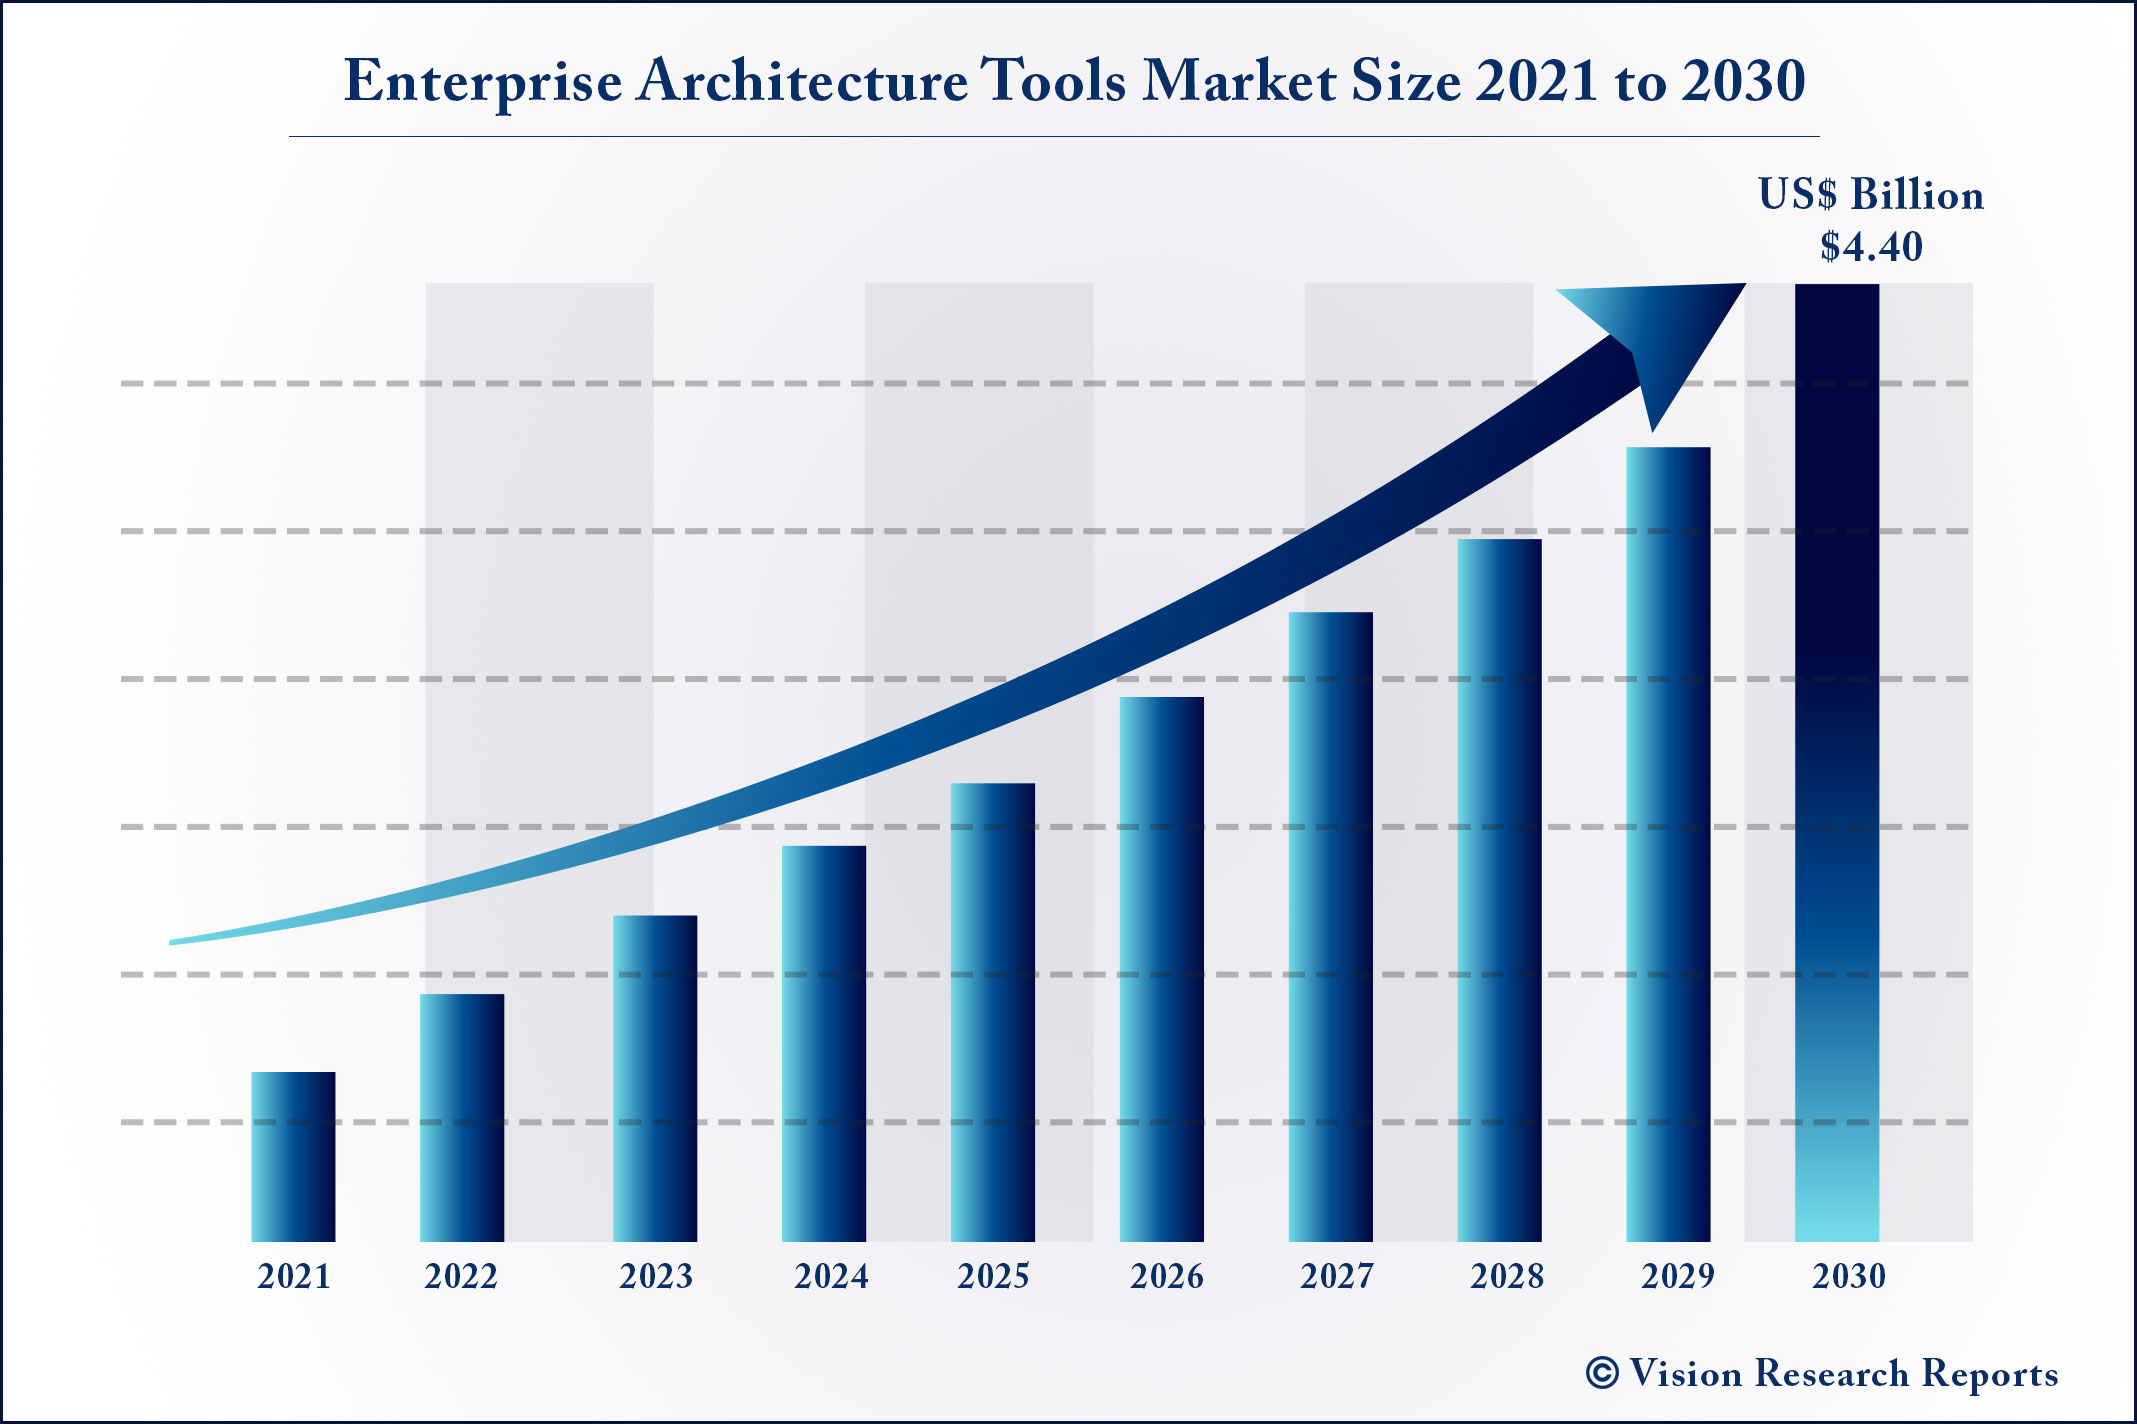 Enterprise Architecture Tools Market Size 2021 to 2030